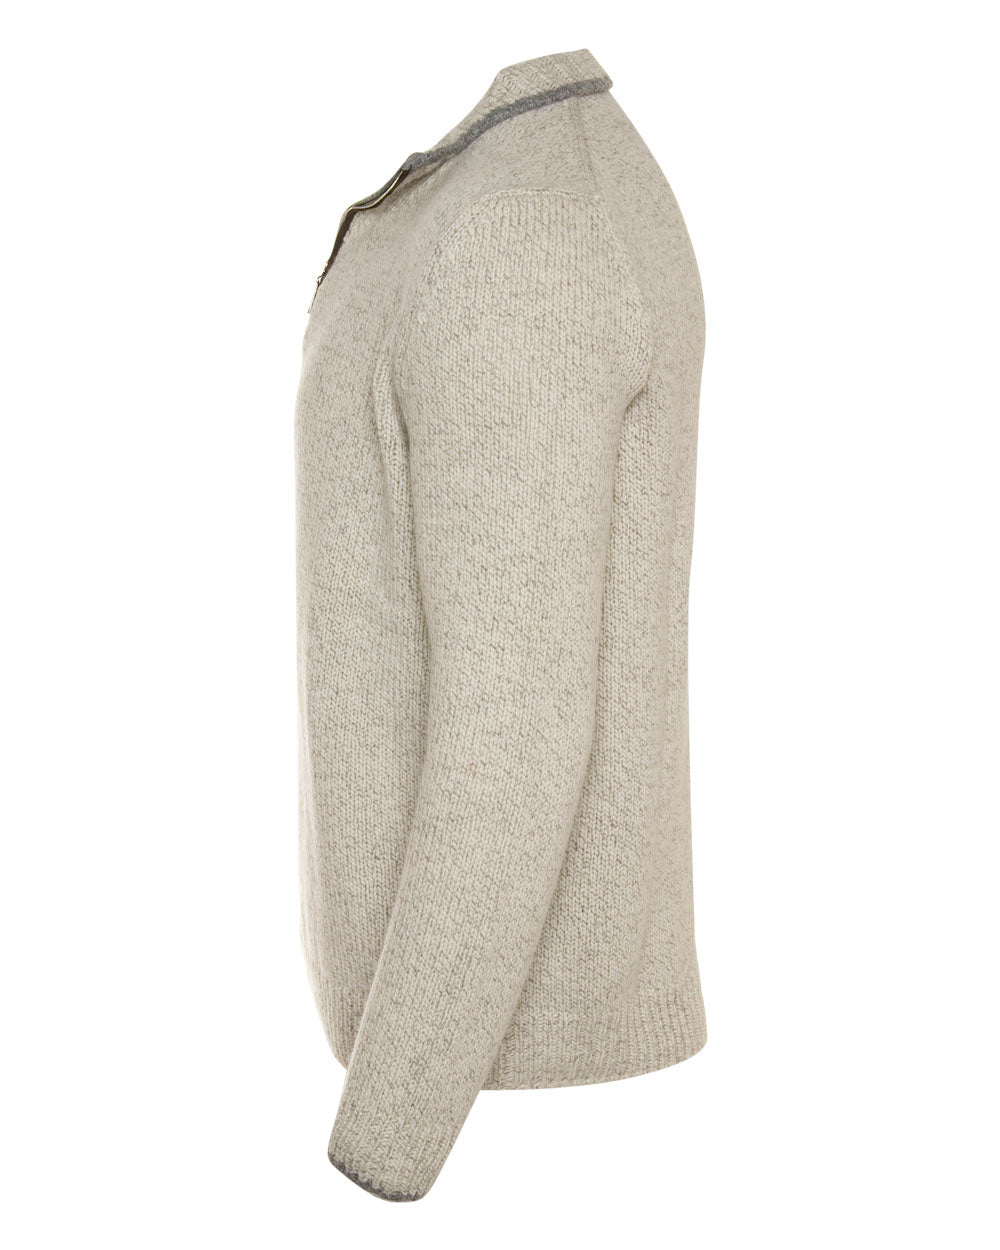 White and Grey Eco Twist Quarter Zip Sweater